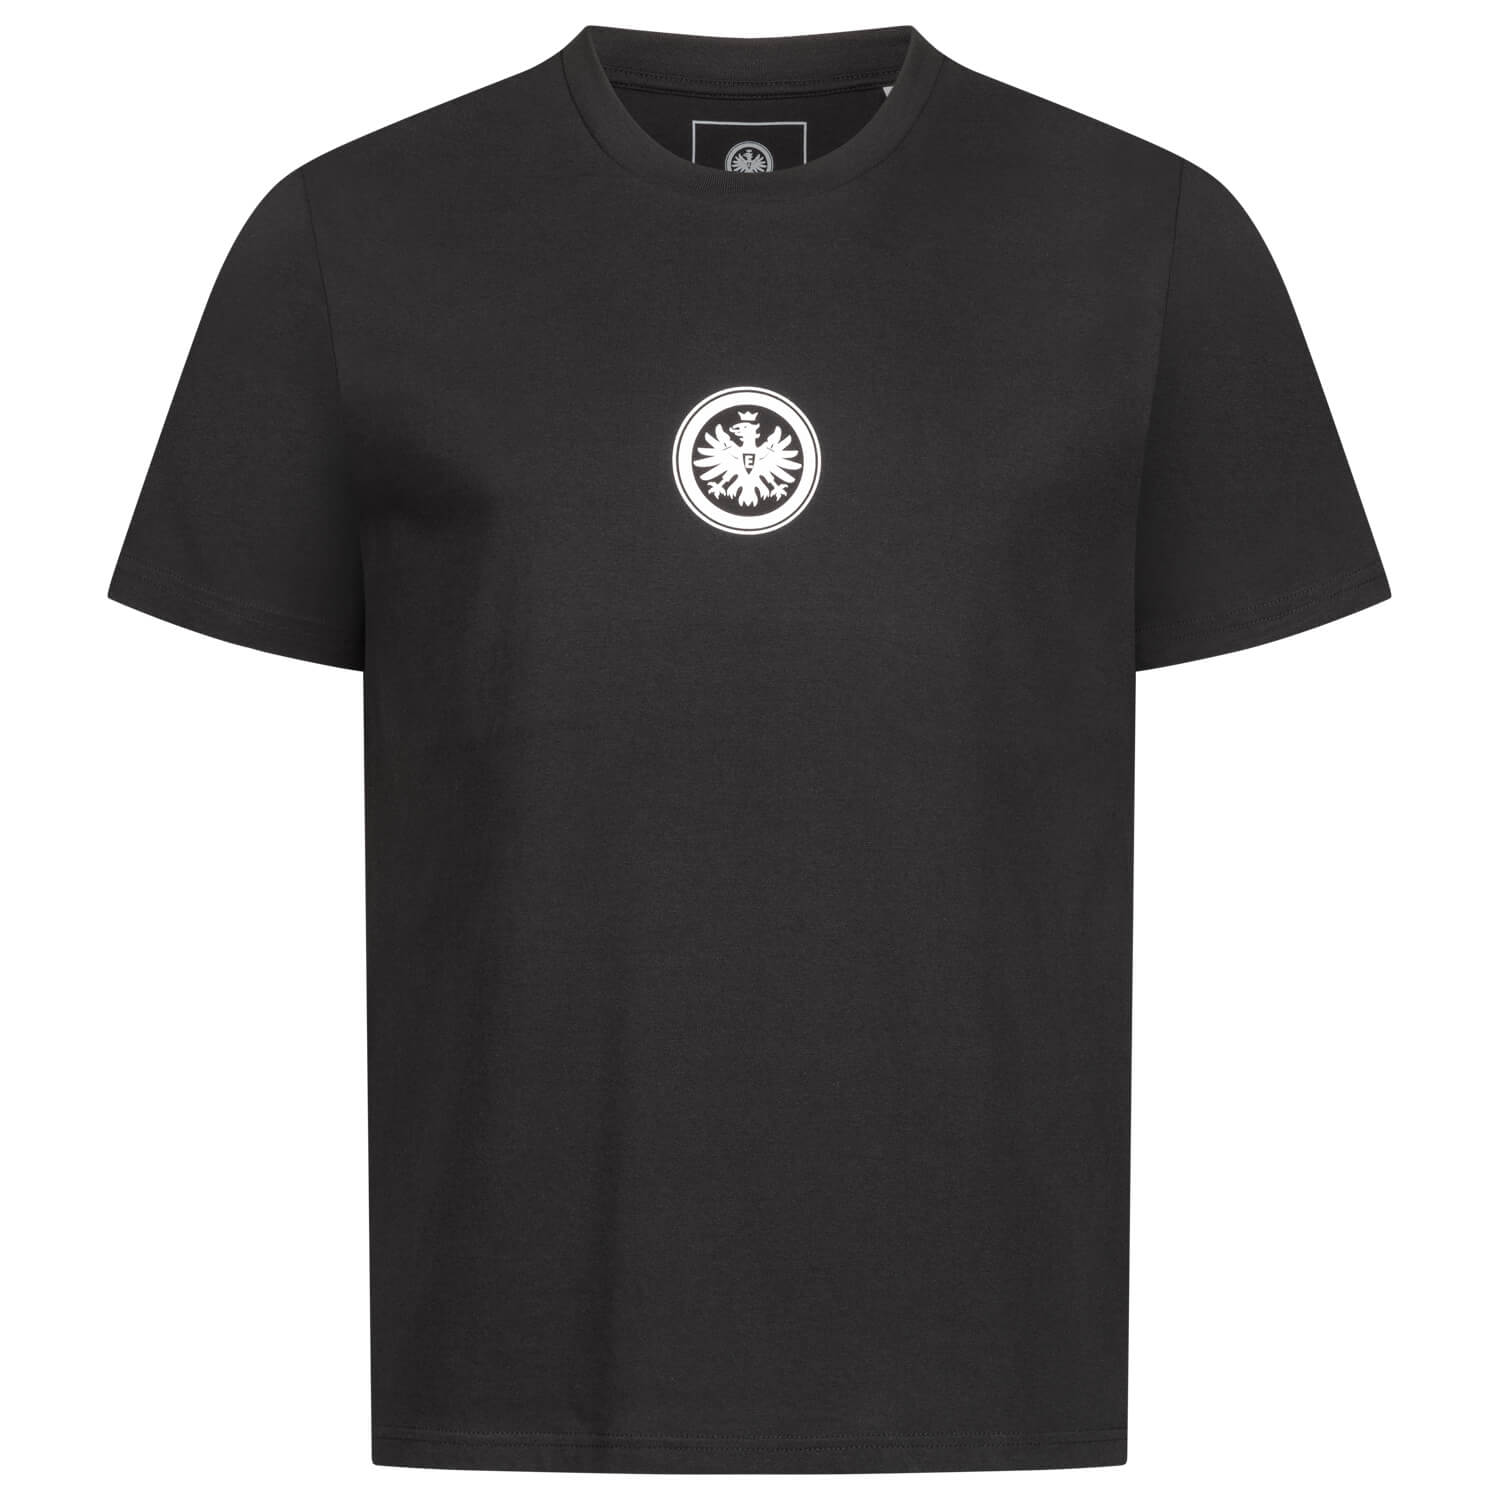 Bild 1: T-Shirt One Club Black